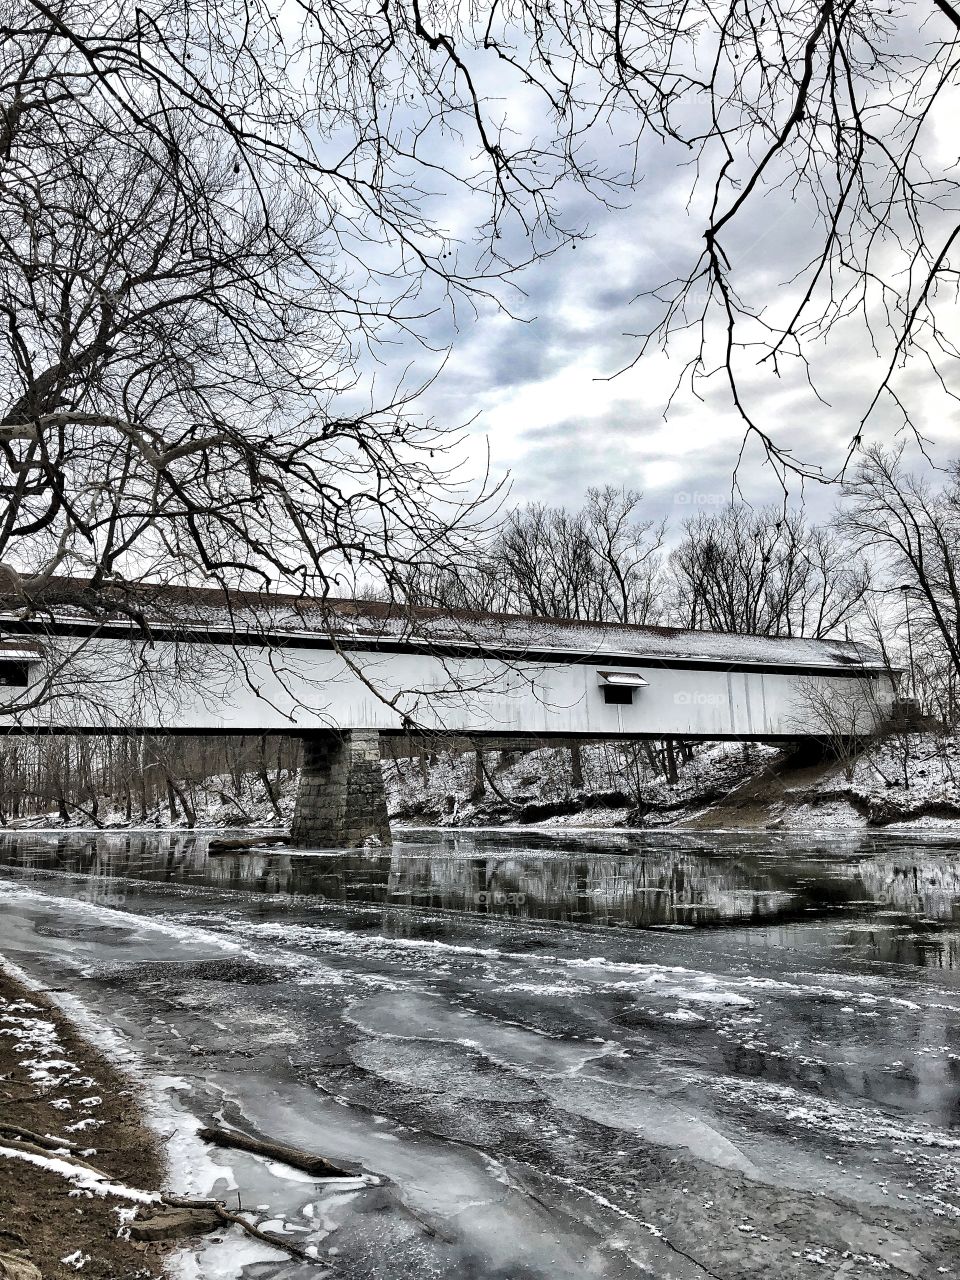 Covered bridge in winter views